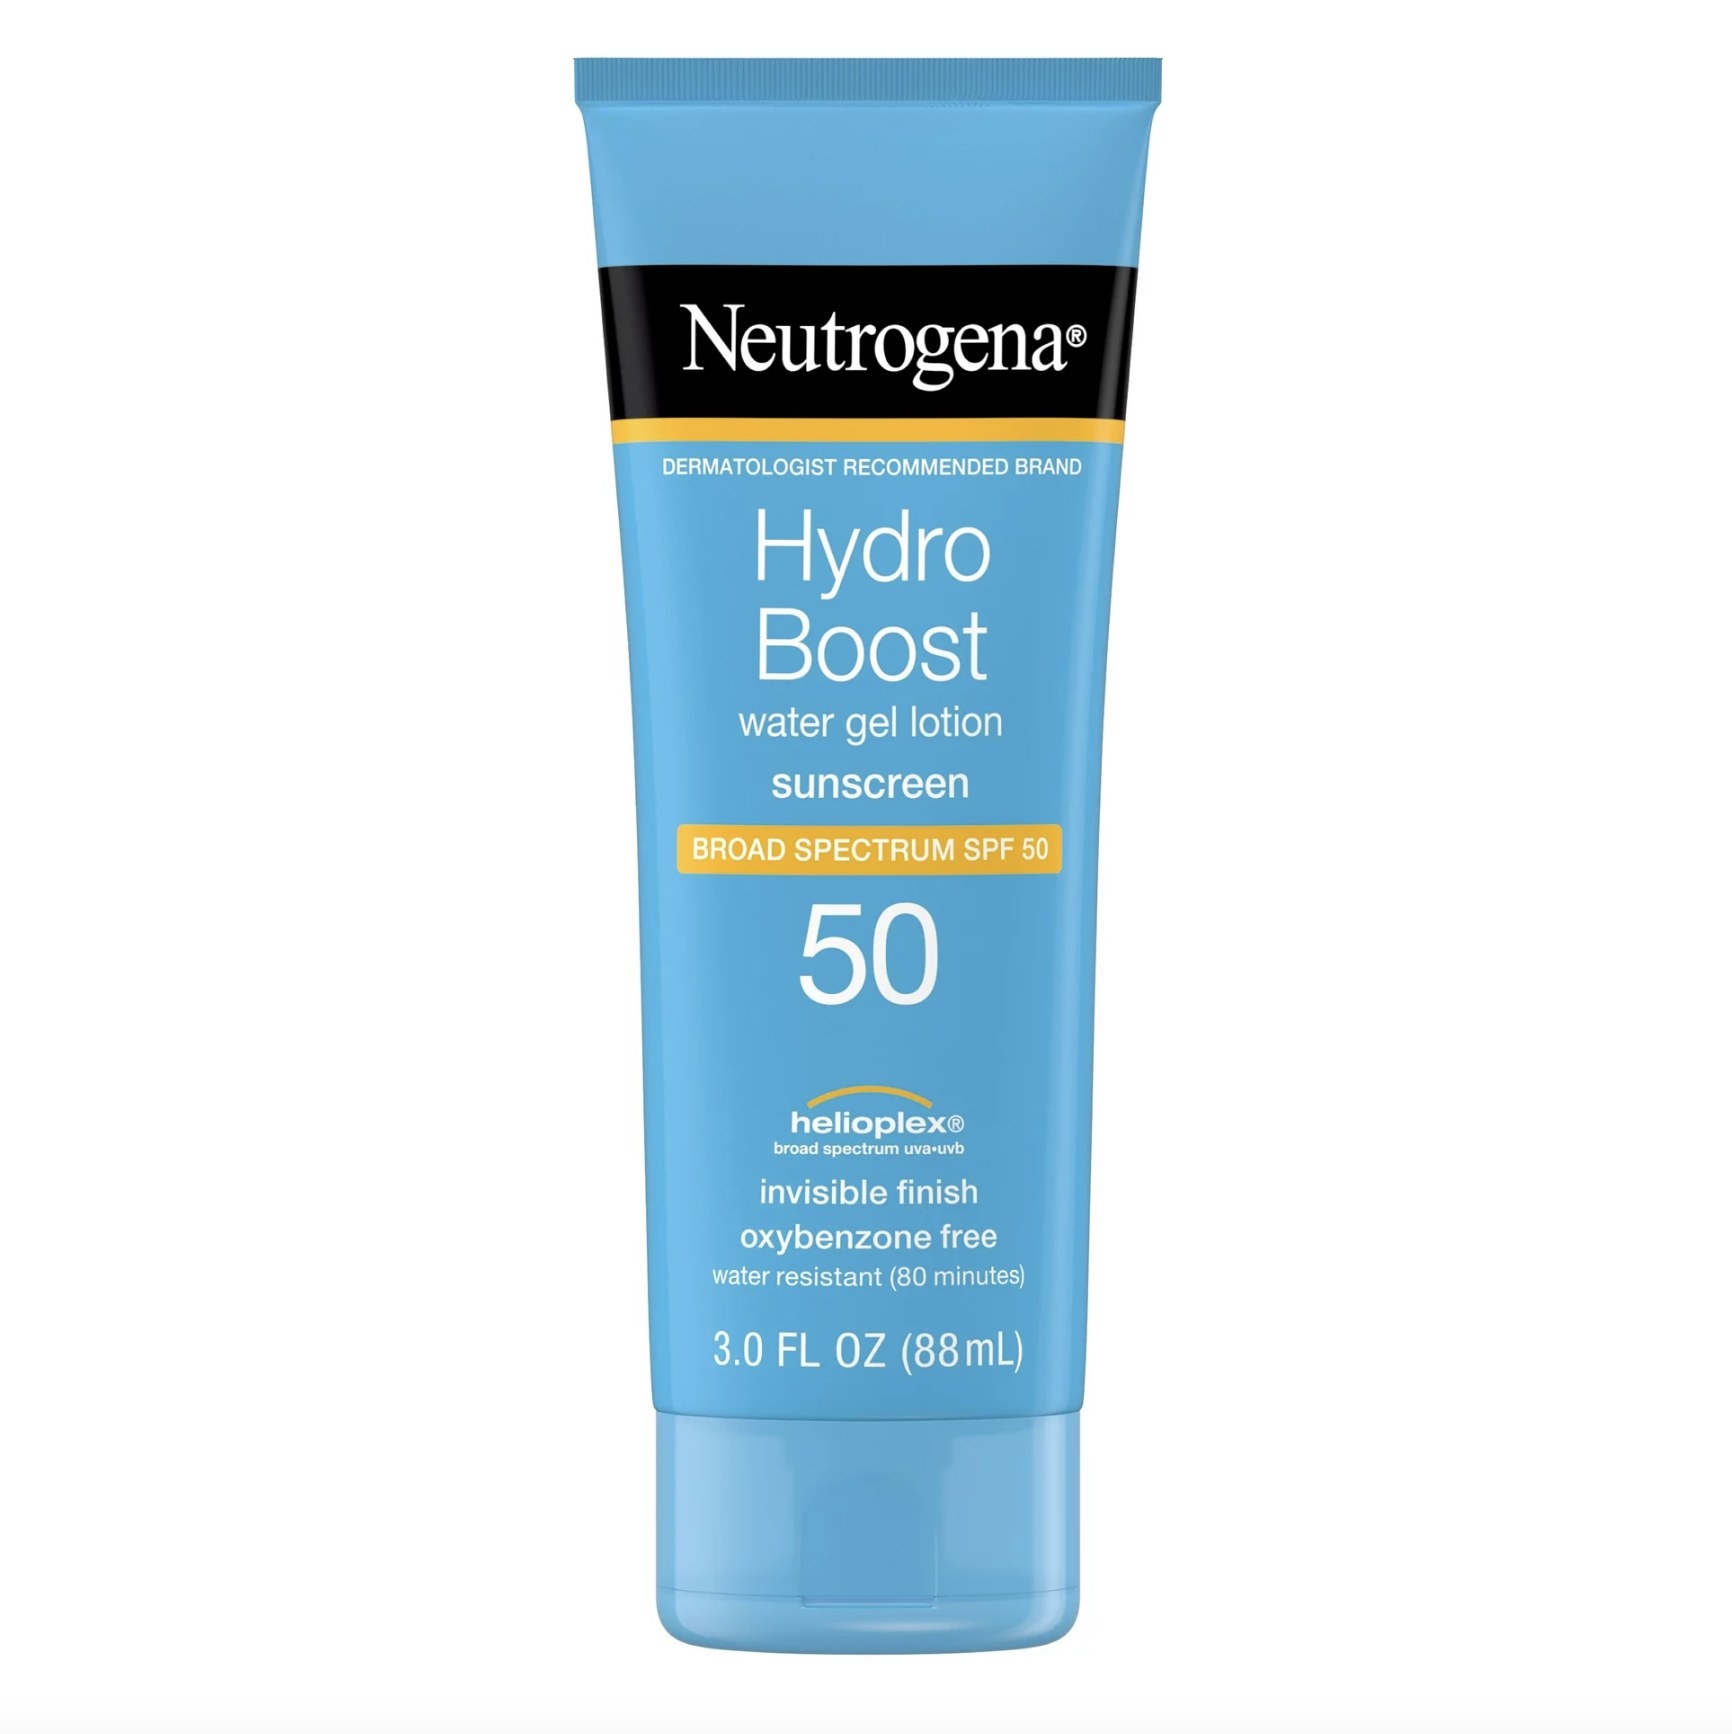 the neutrogena sunscreen